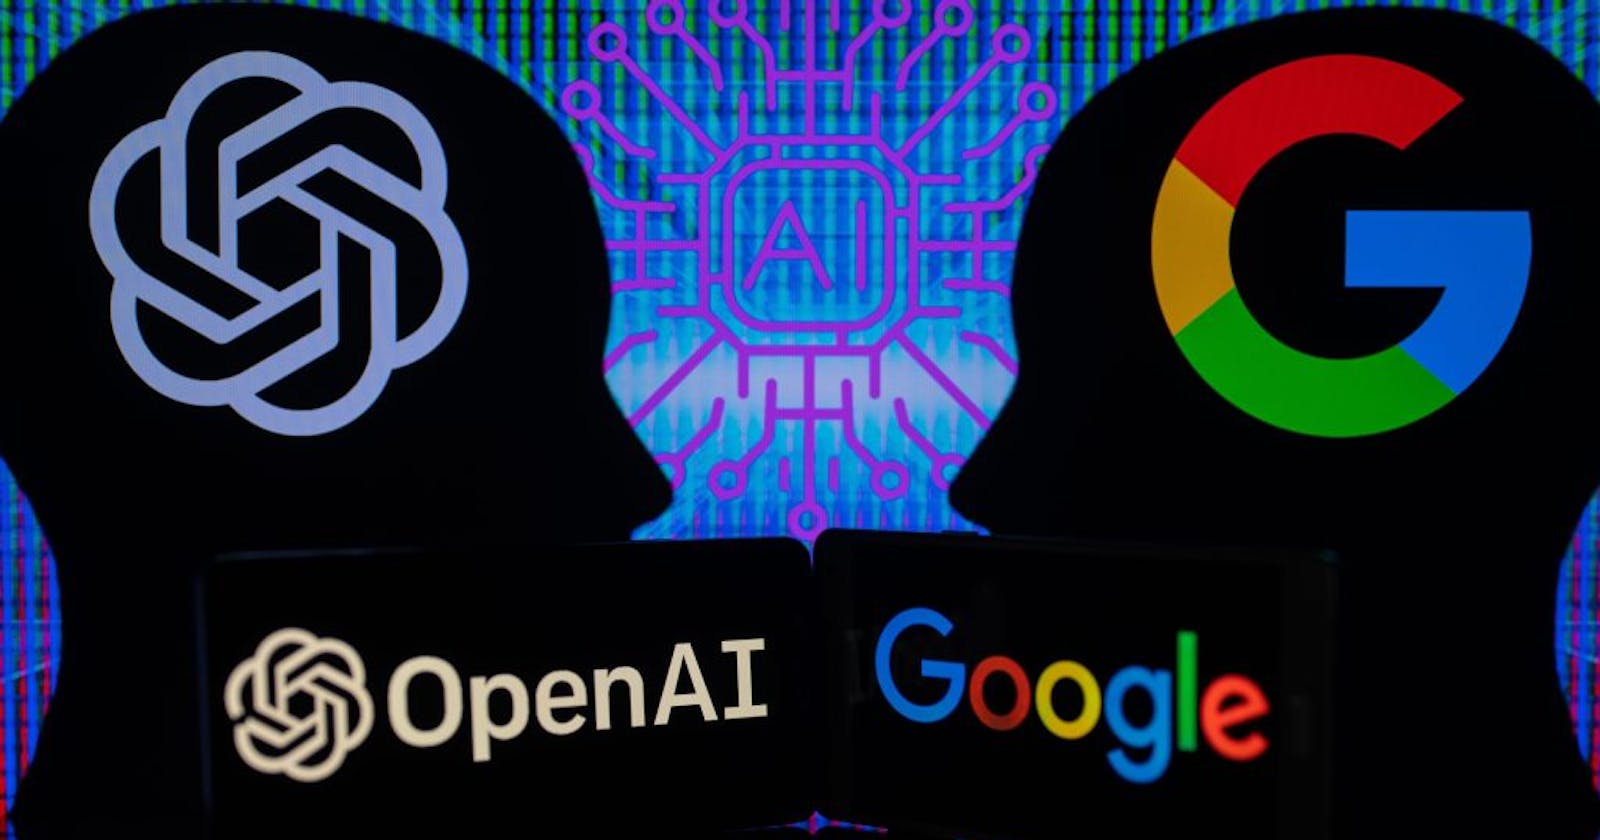 Google Bard vs. OpenAI ChatGPT: The Battle of the AI Chatbots